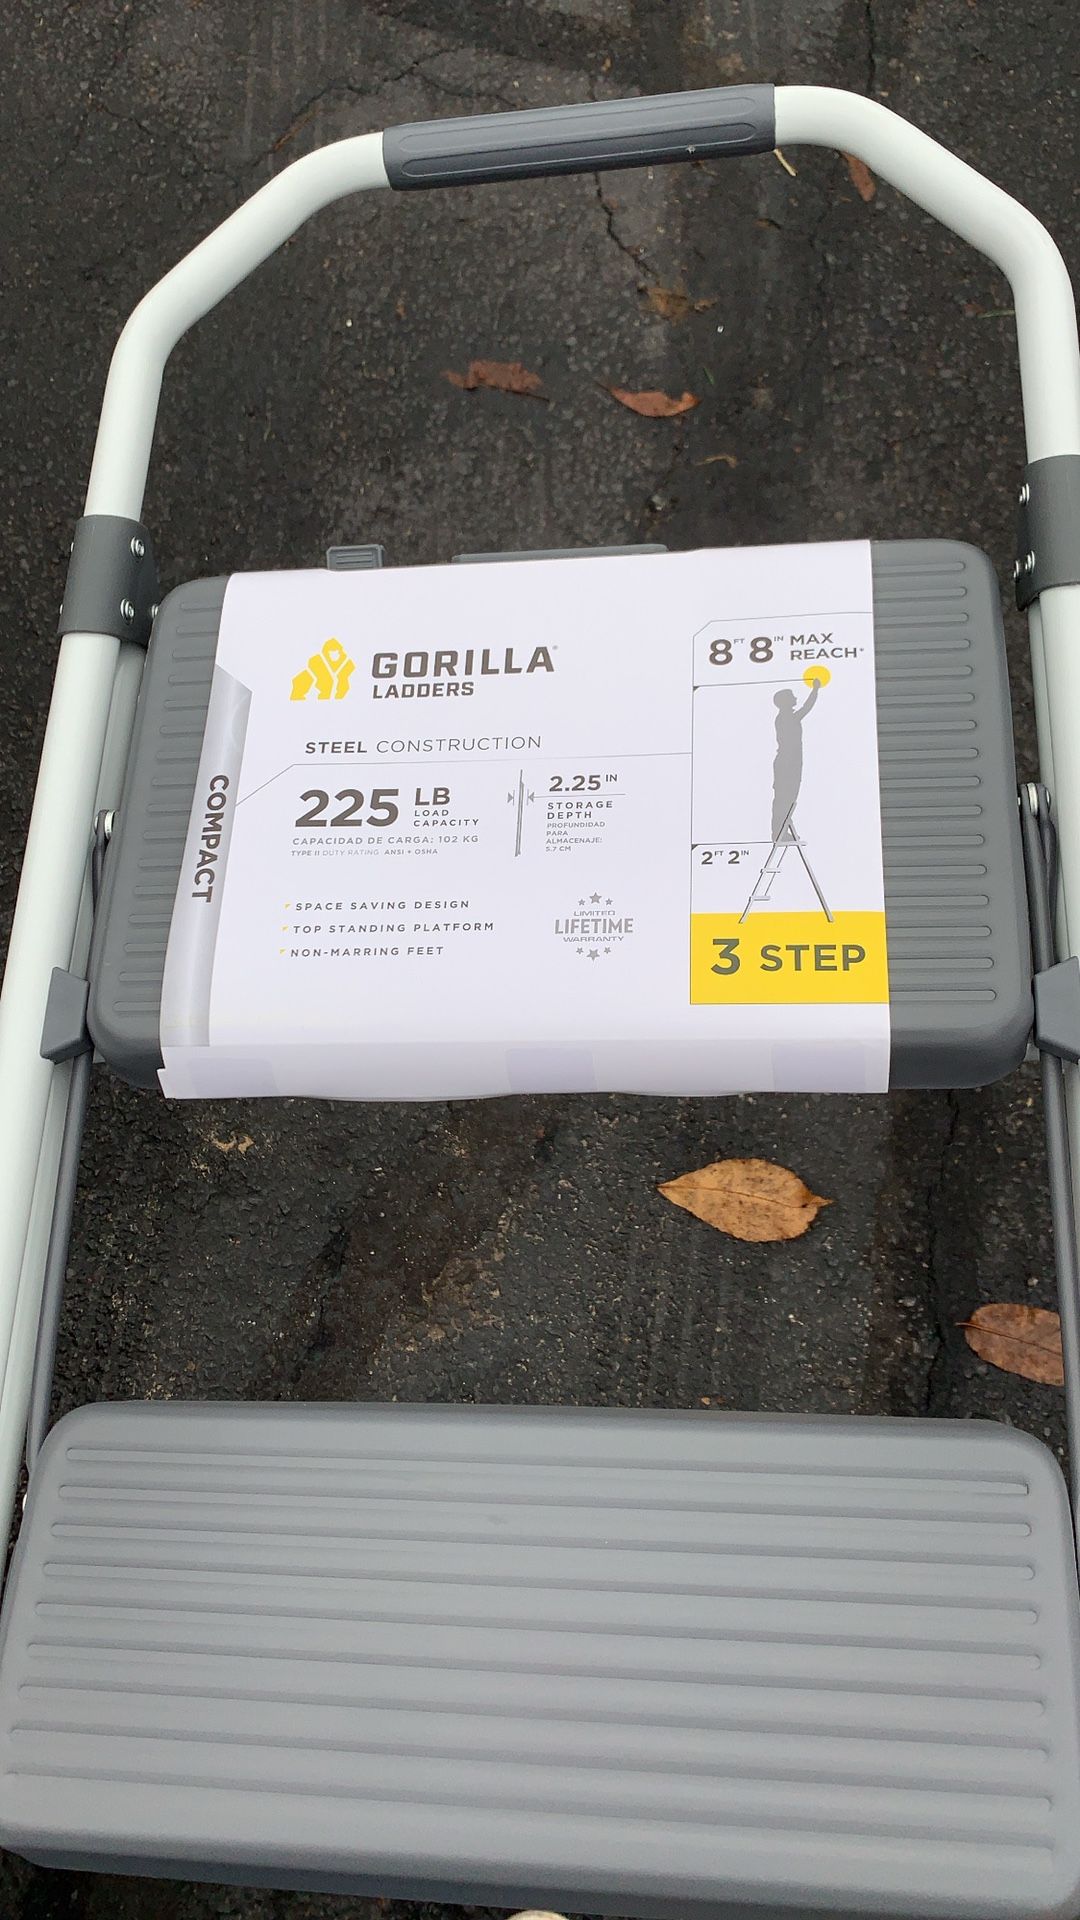 Brand new gorilla ladder 3 steps